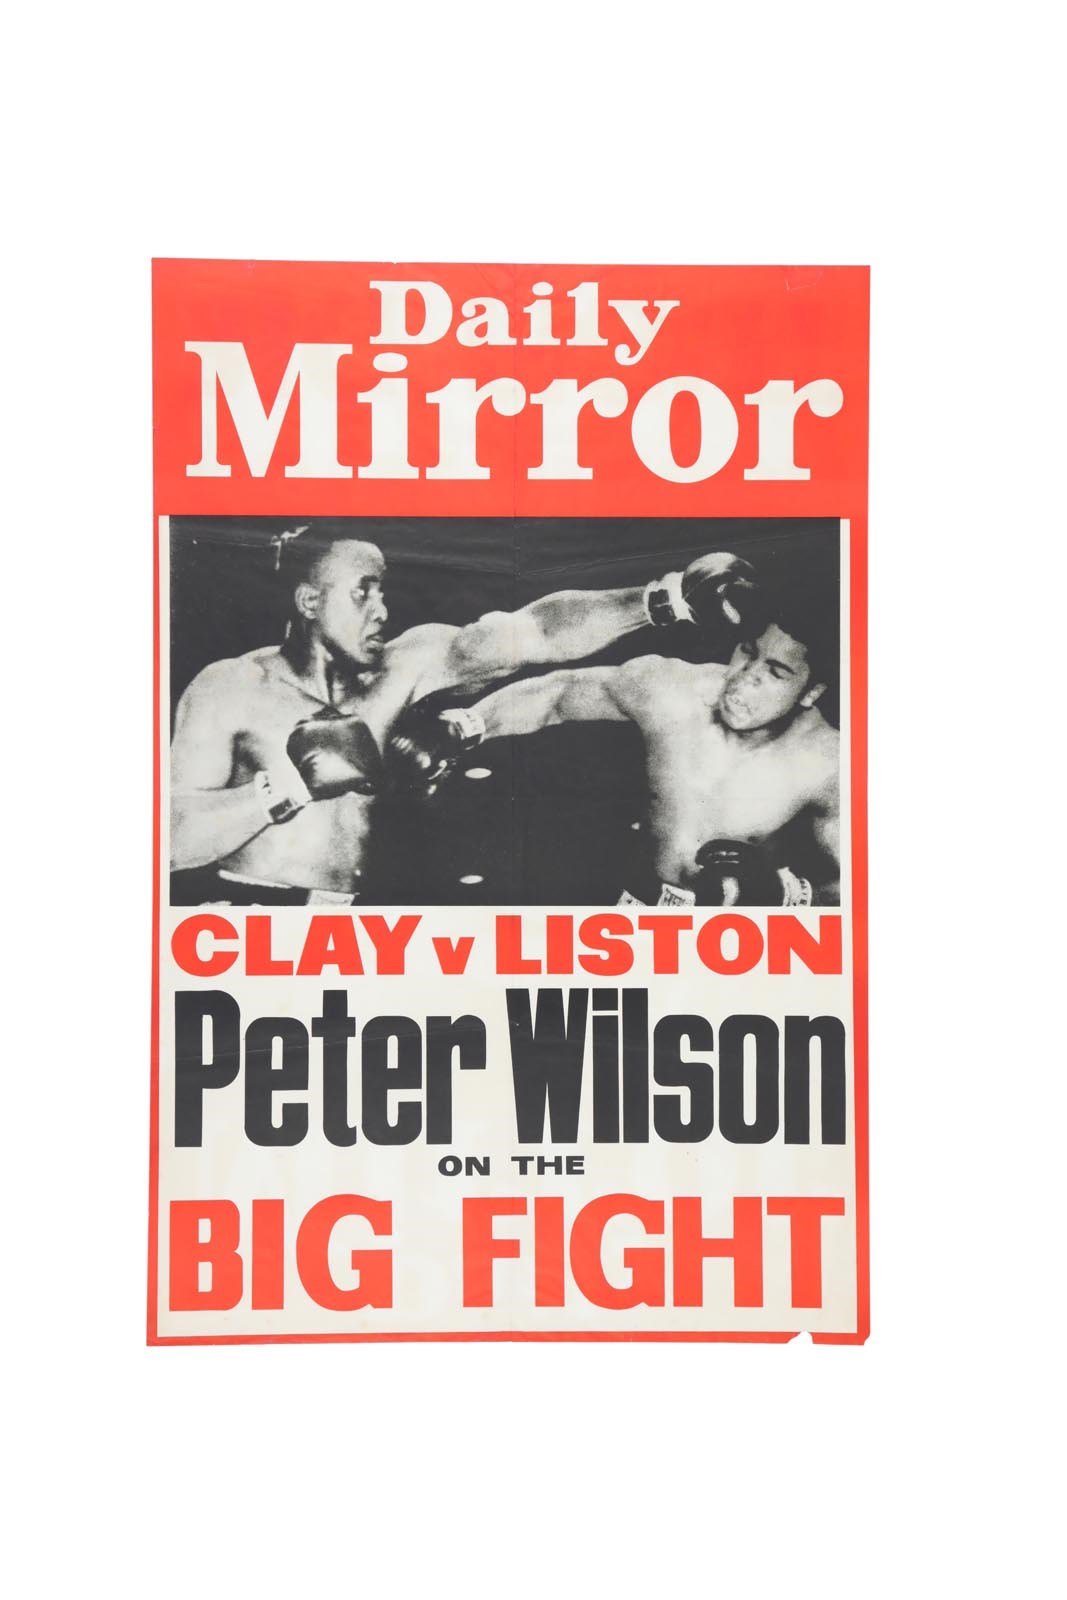 Muhammad Ali & Boxing - 1965 Cassius Clay v Sonny Liston Daily Mirror Poster